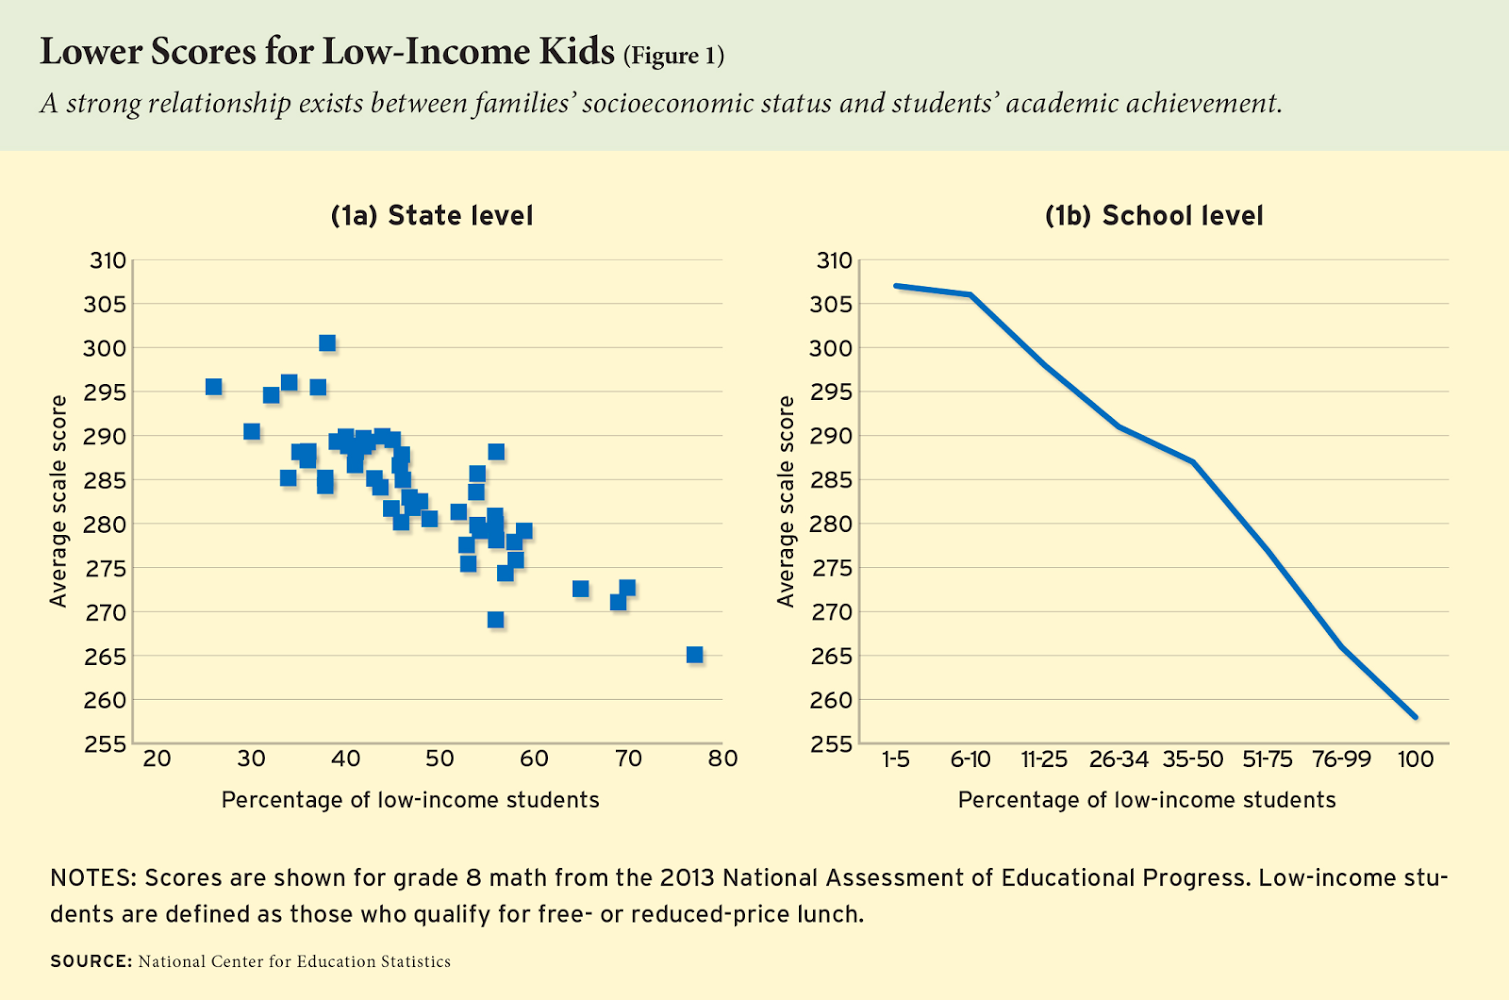    Source:  http://educationnext.org/americas-mediocre-test-scores-education-poverty-crisis/    